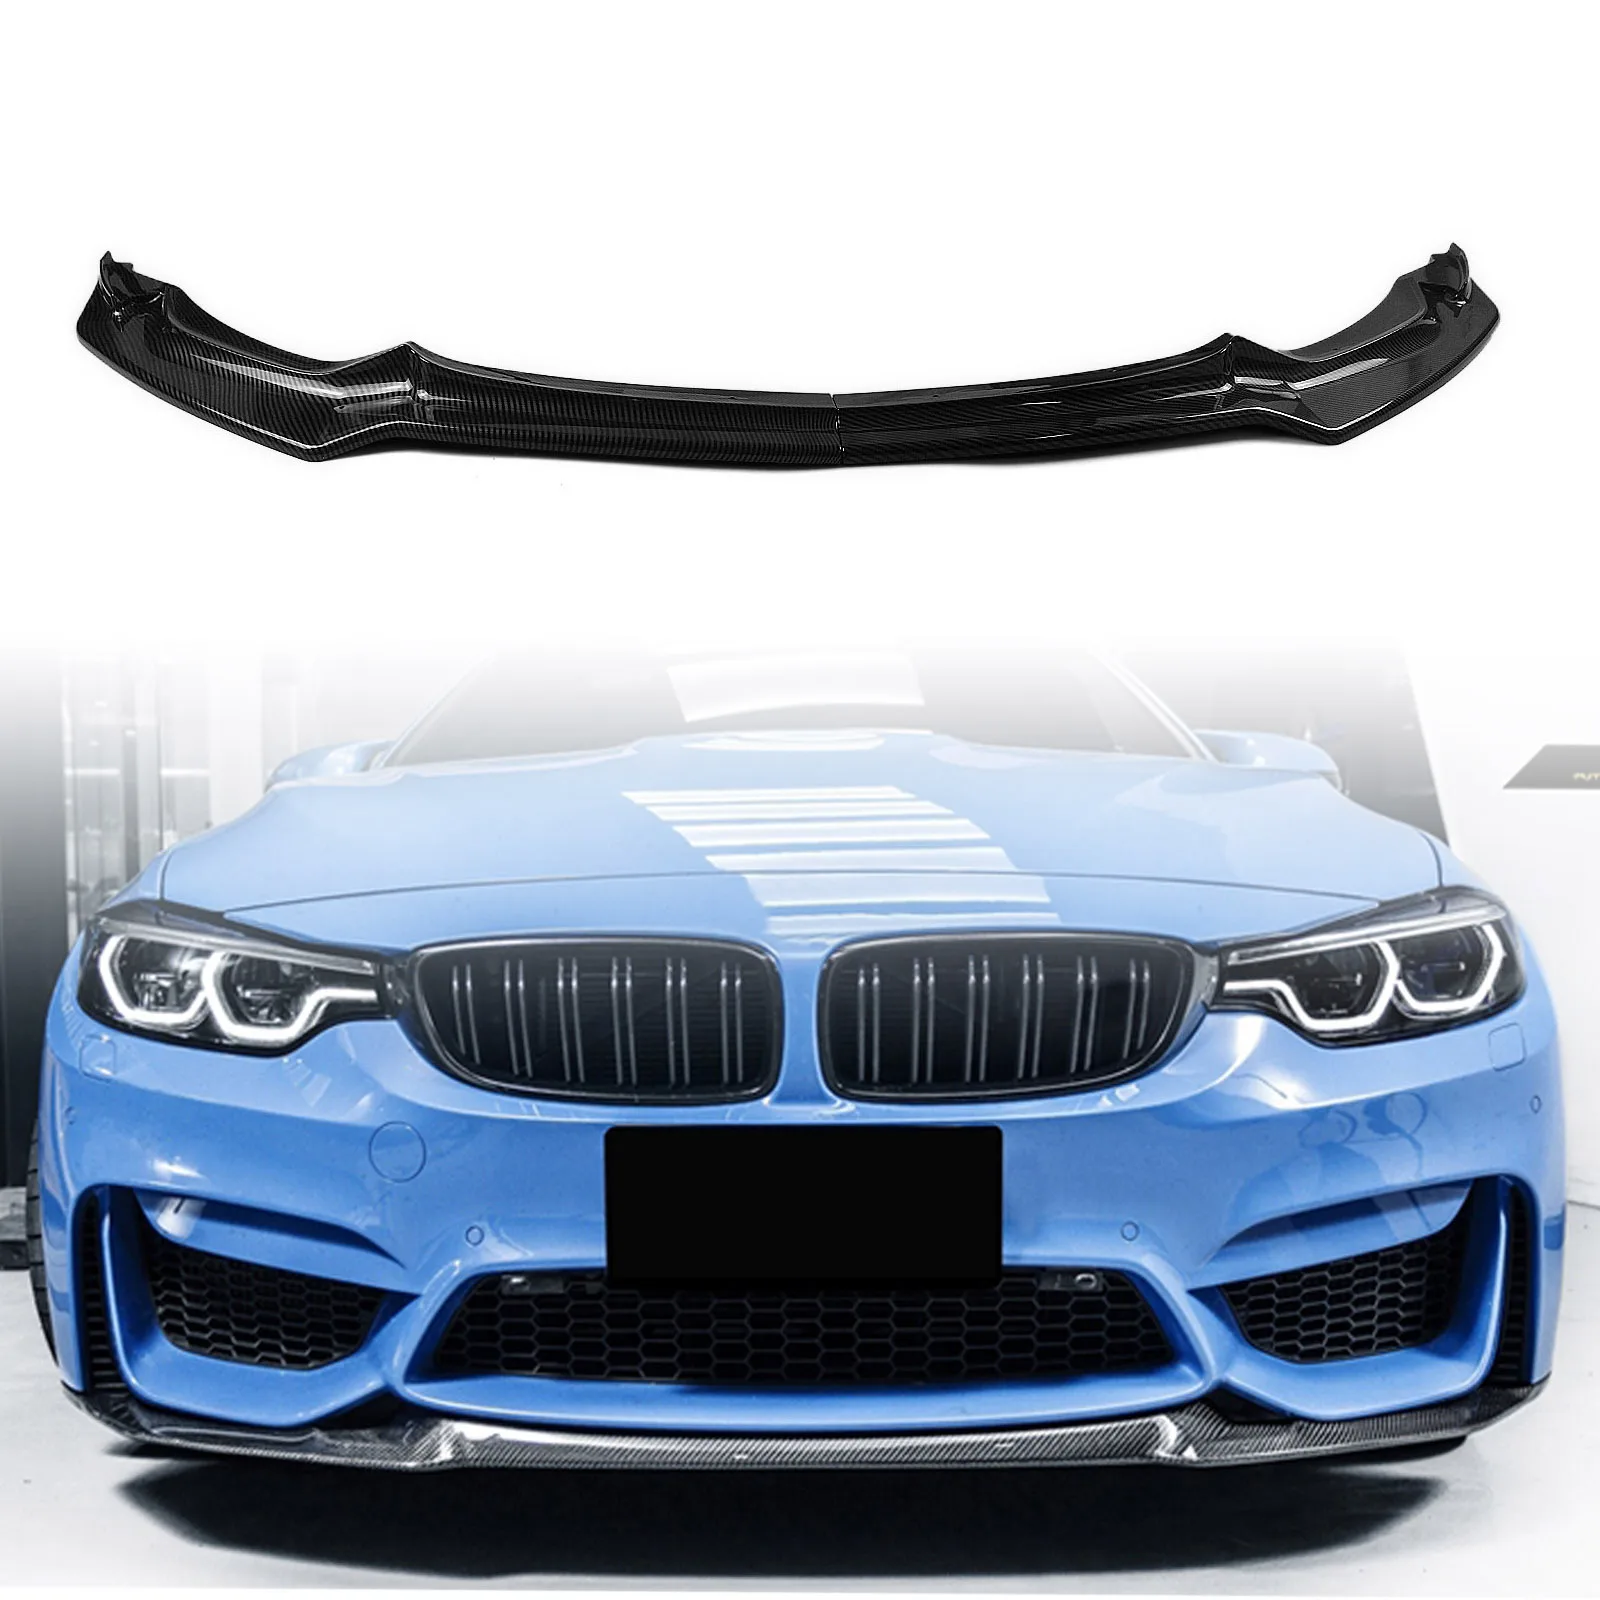 

For BMW F80 M3 F82 F83 M4 2015-2020 Car Front Bumper Spoiler Lip Carbon Fiber Look ABS Lower Body Kit Splitter Guard Plate Blade